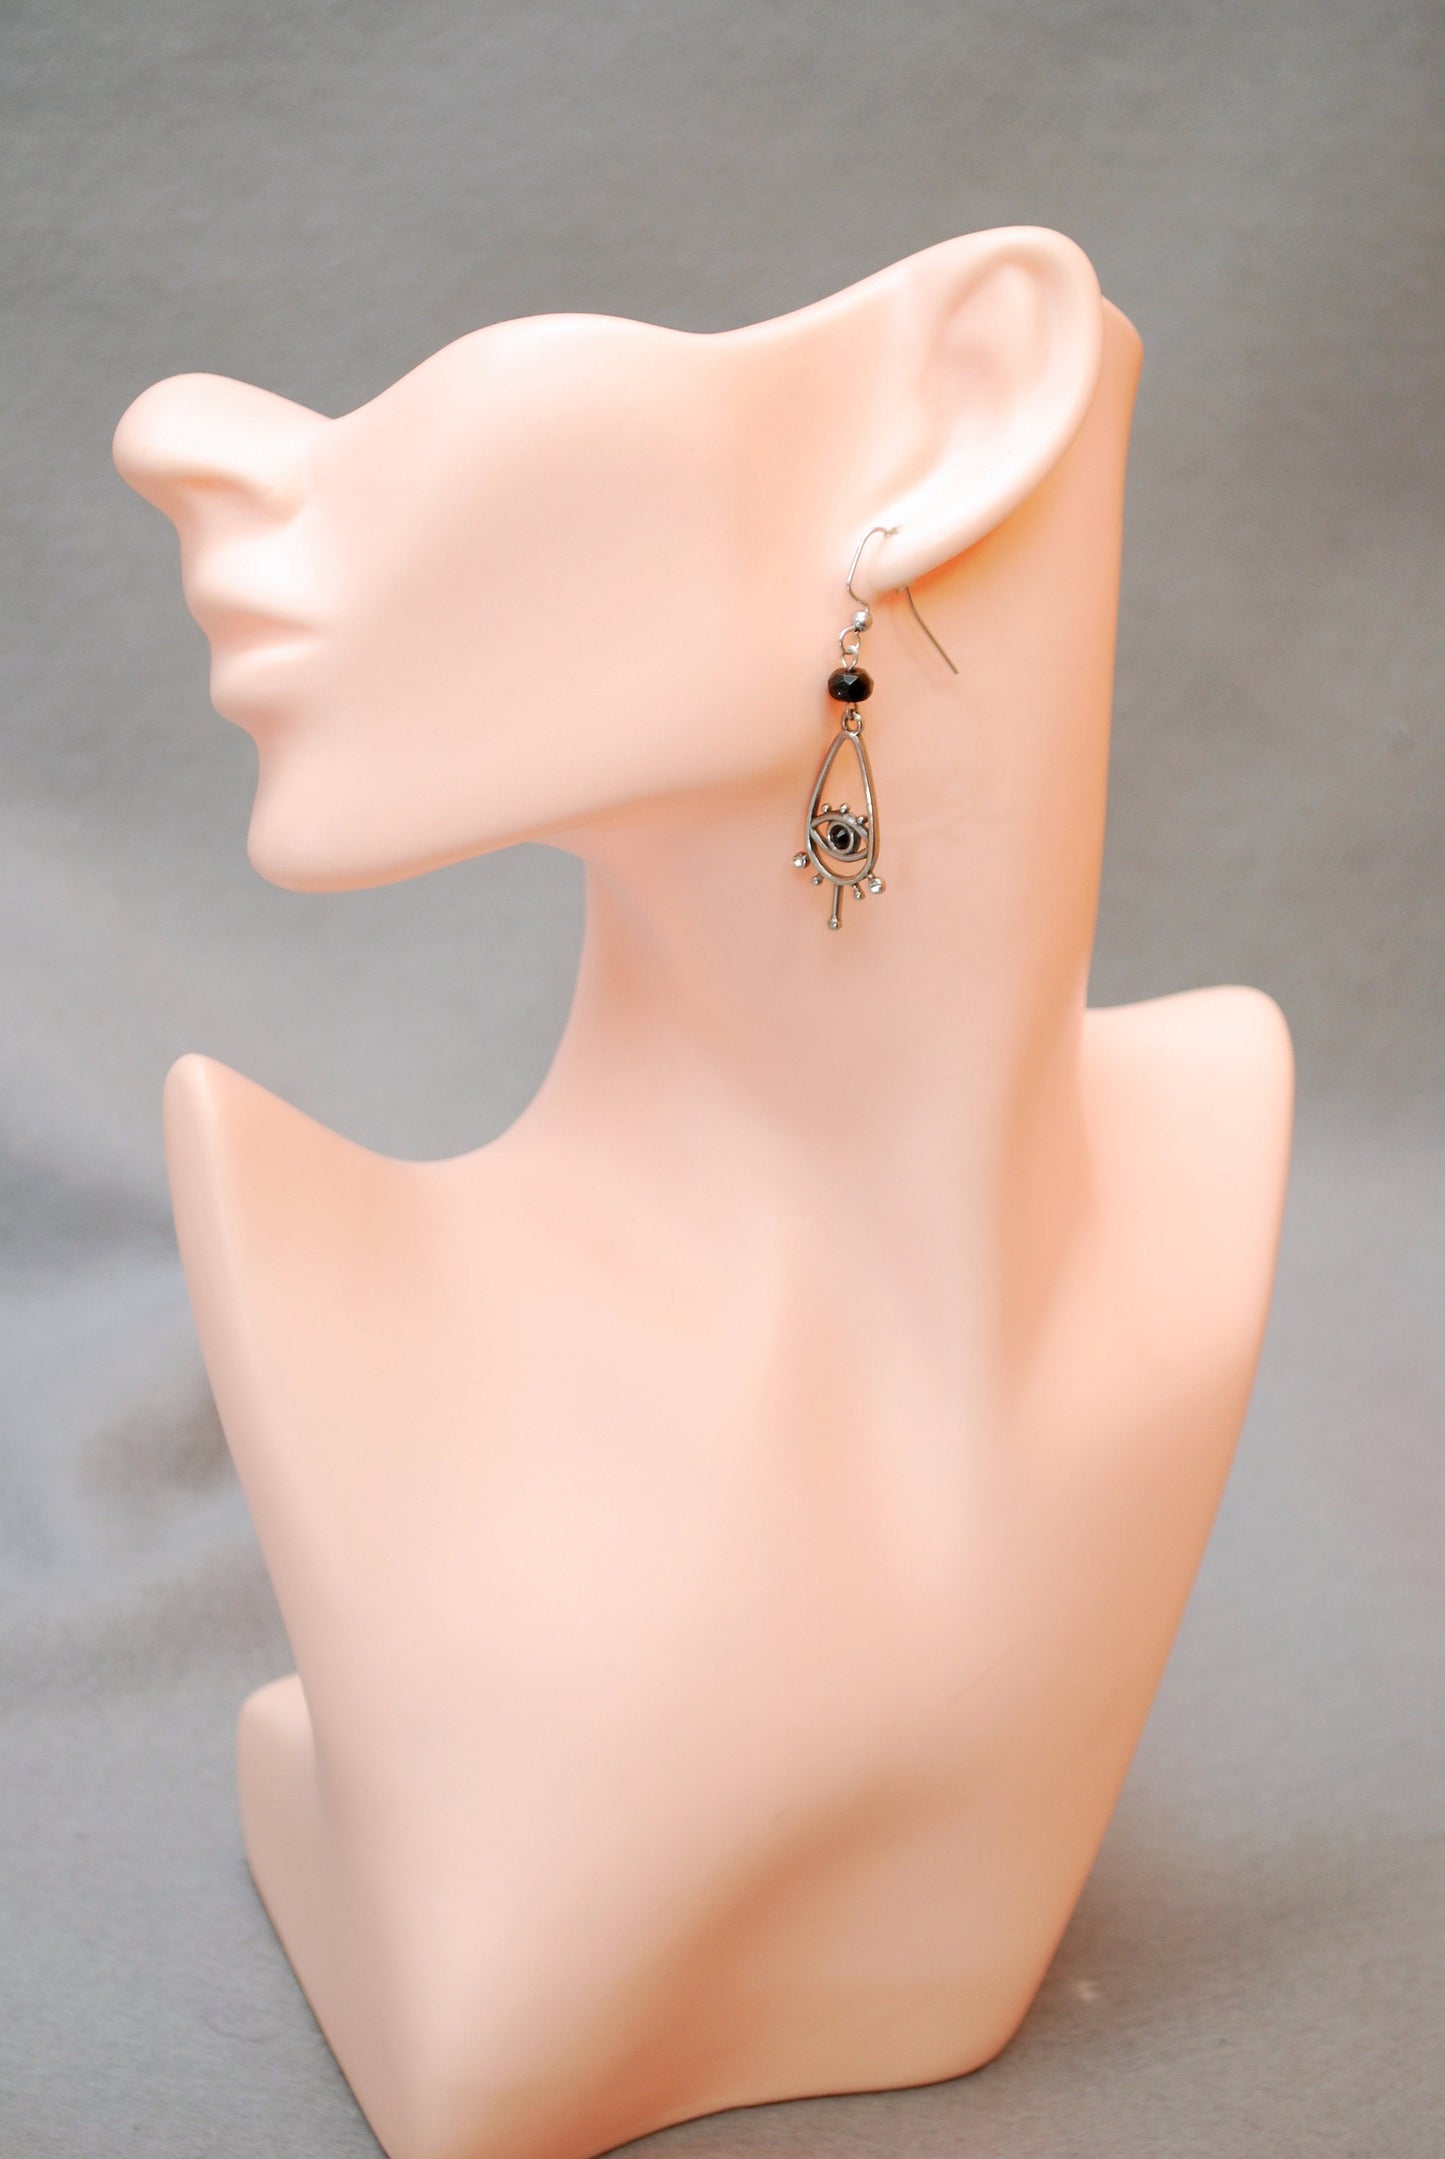 Ethnic Elegance Drops: Stainless Steel Earrings with Agate, Black agata bead Earrngs, Estibela design, 5.5cm 2.2", Ethnic-inspired earrings